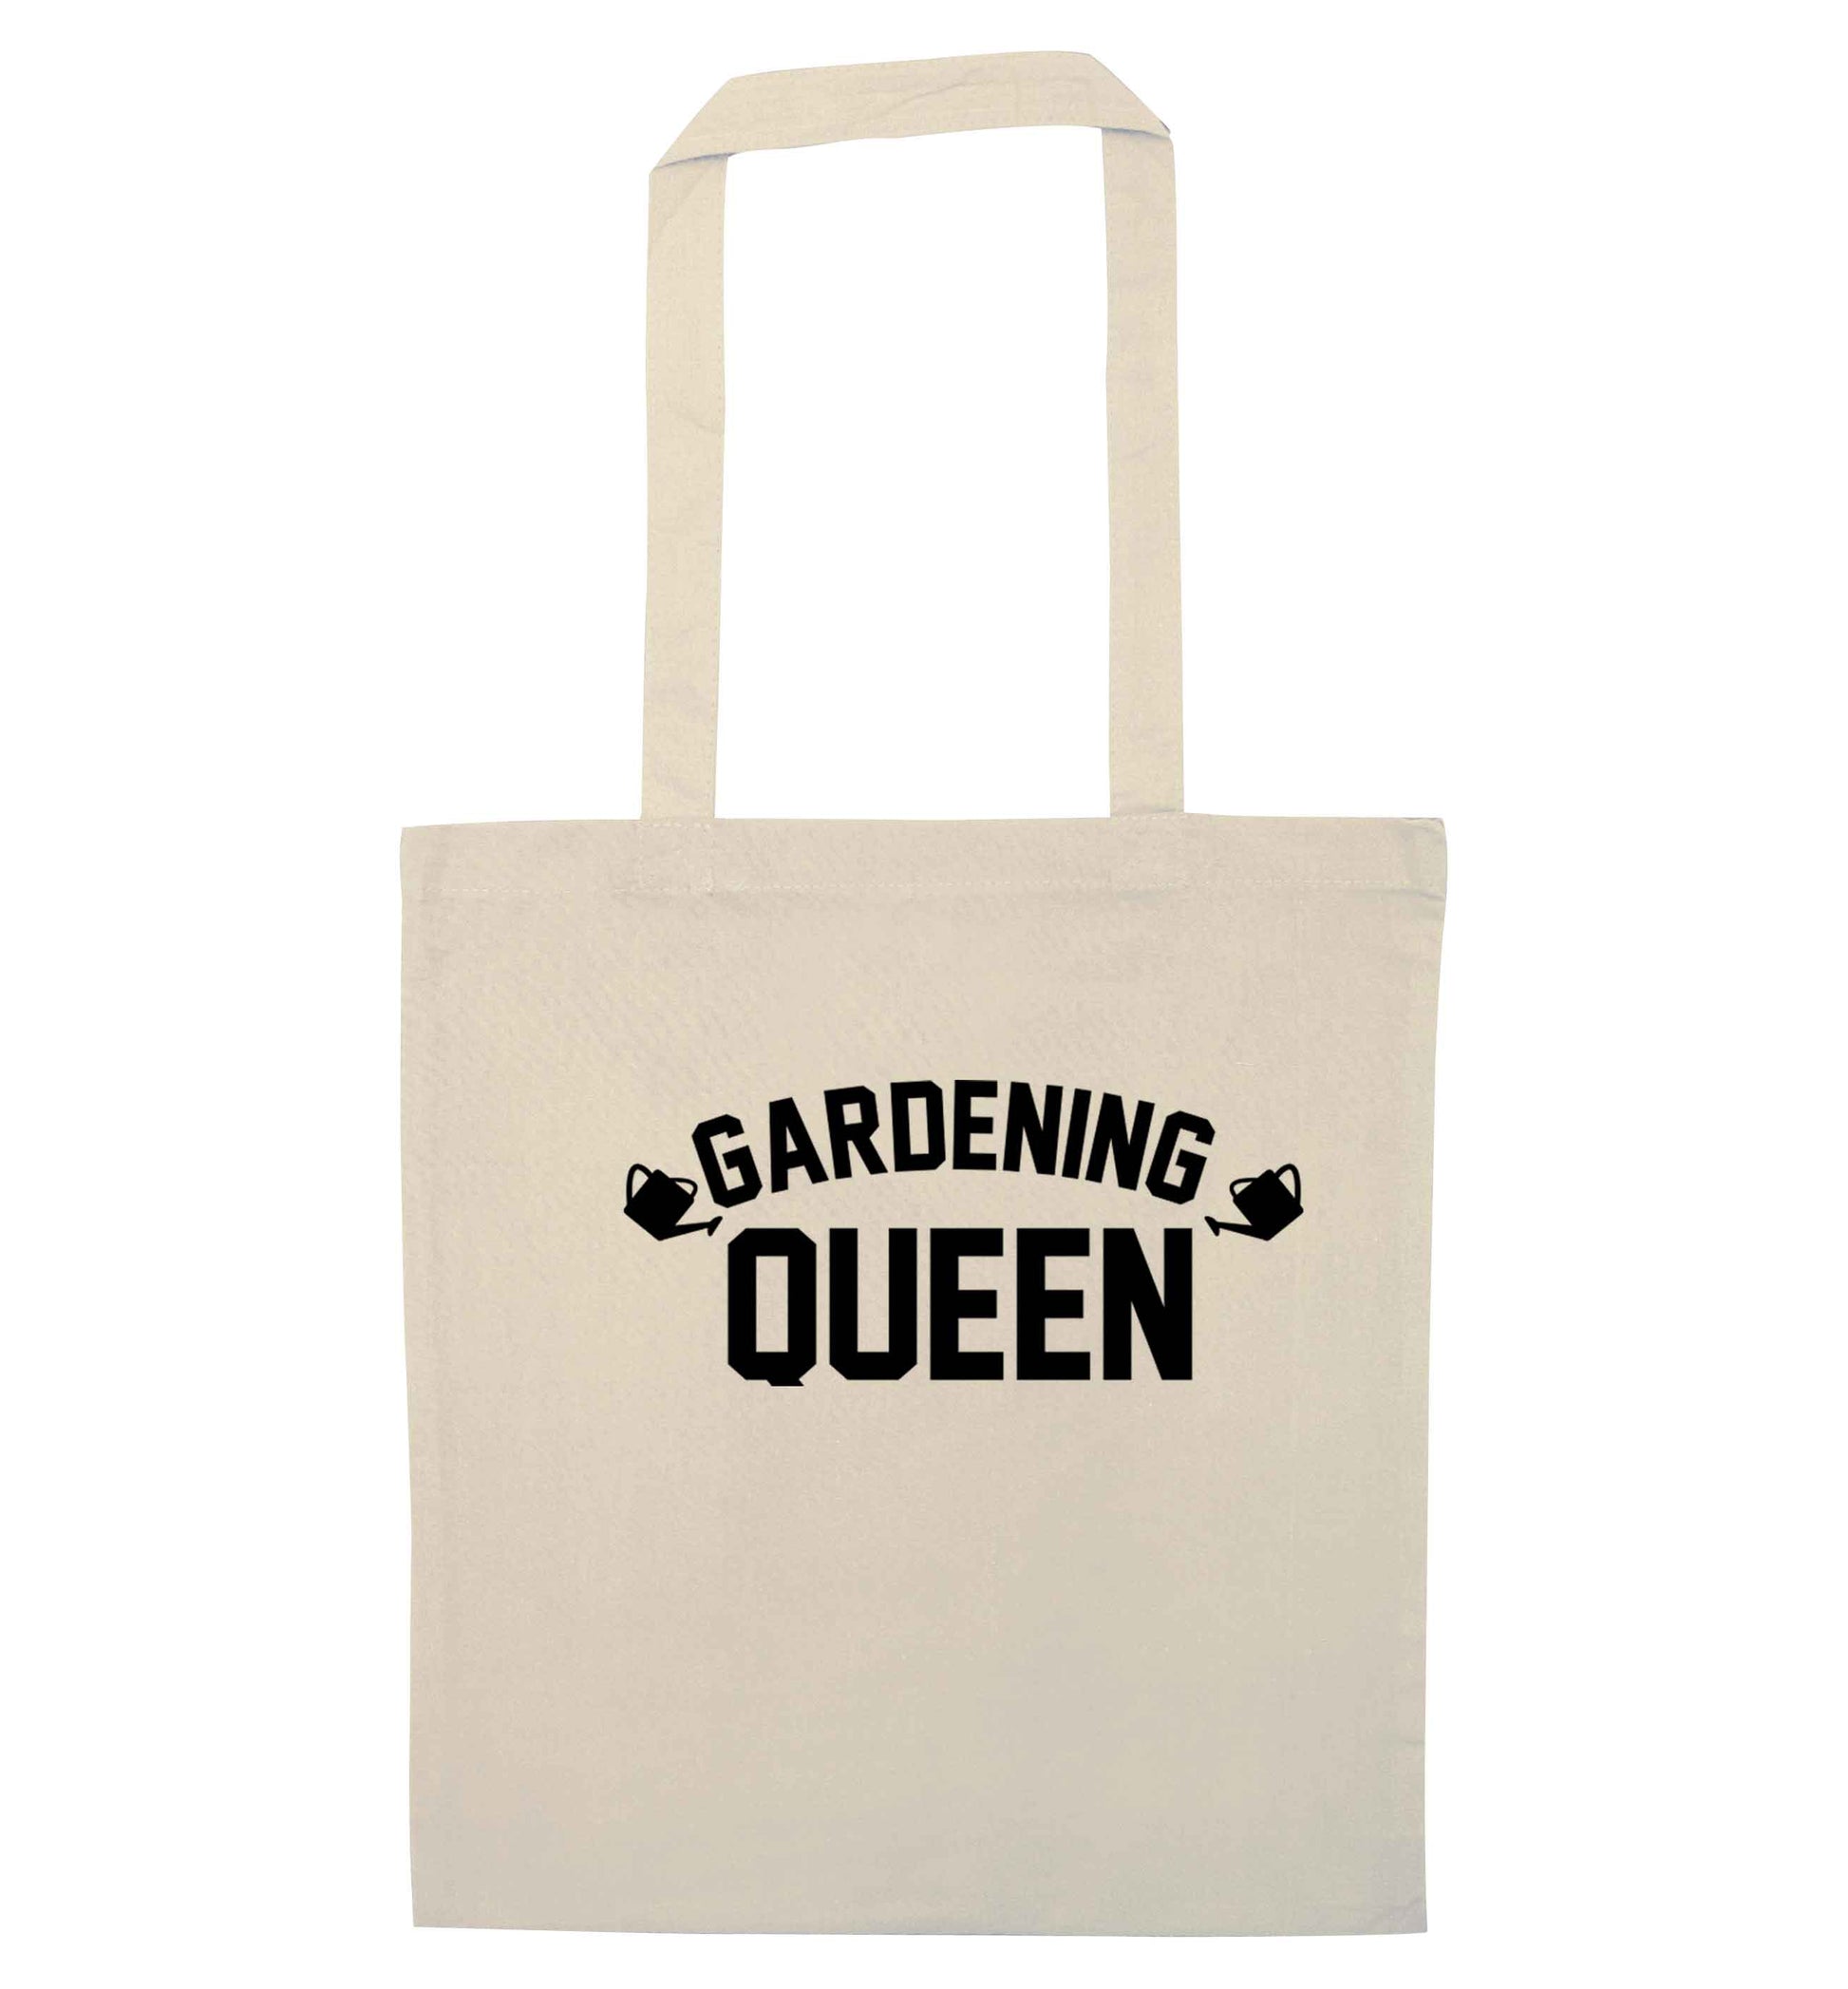 Gardening queen natural tote bag